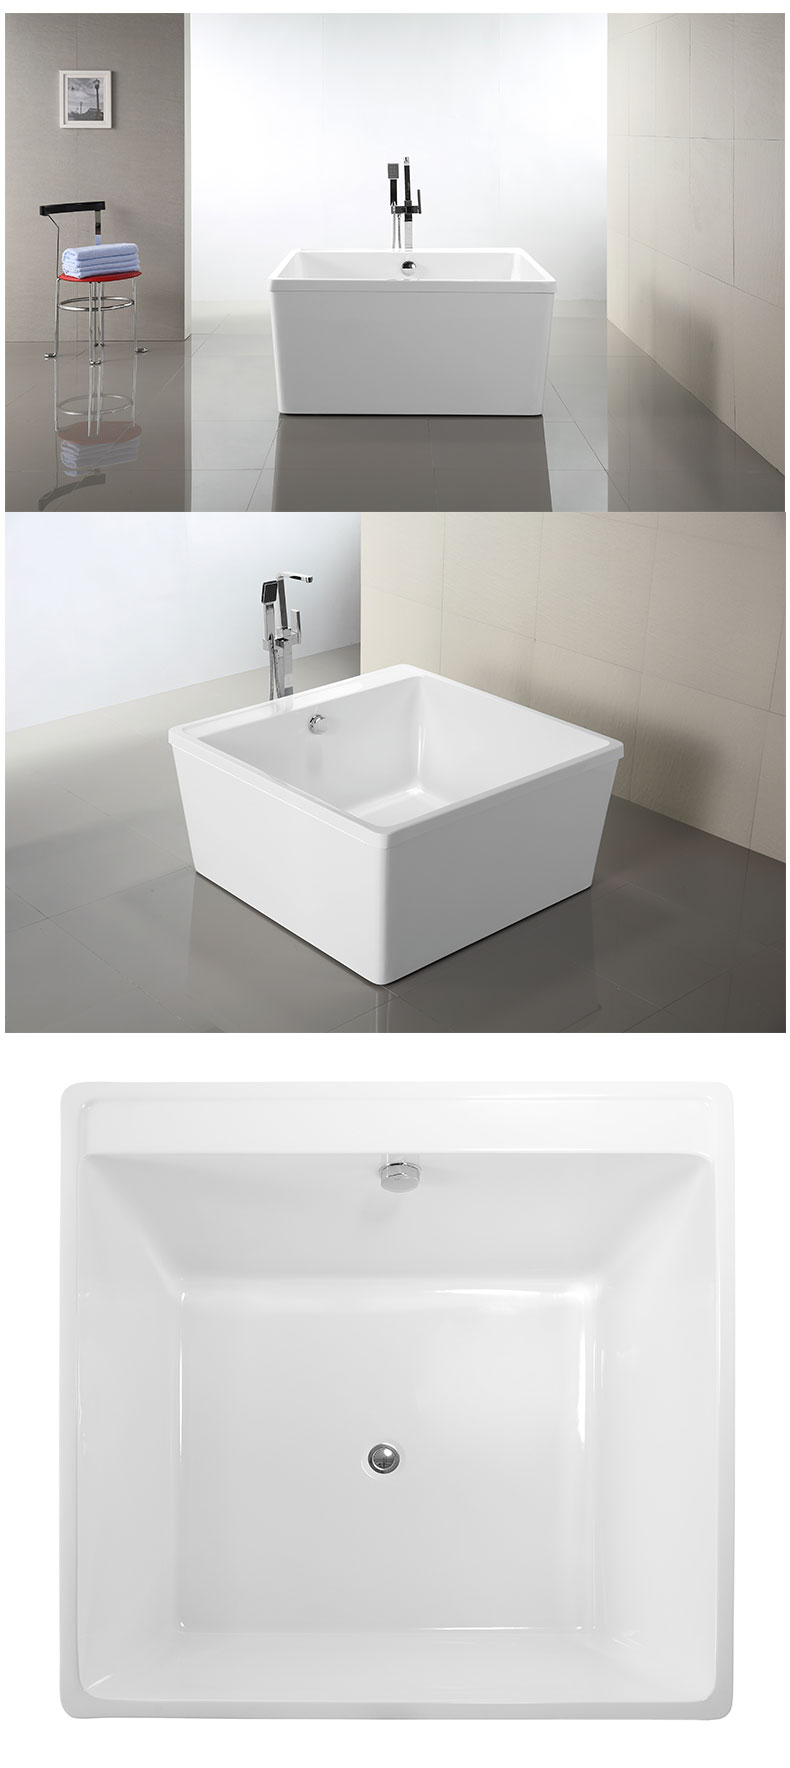 Square shape Freestanding bathtub manufacturers